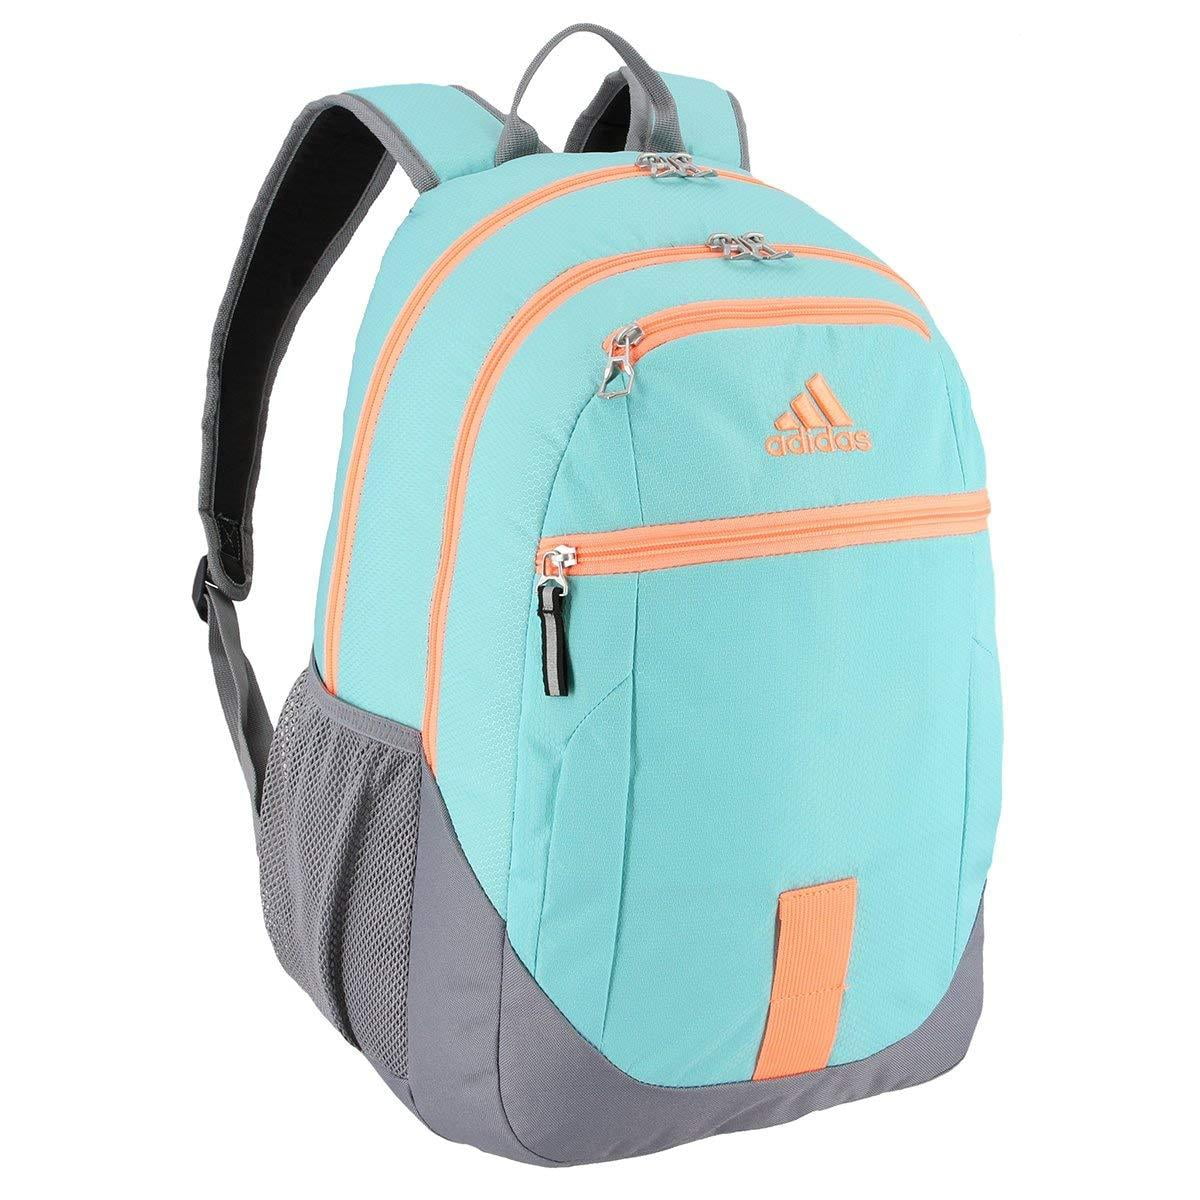 adidas aqua backpack